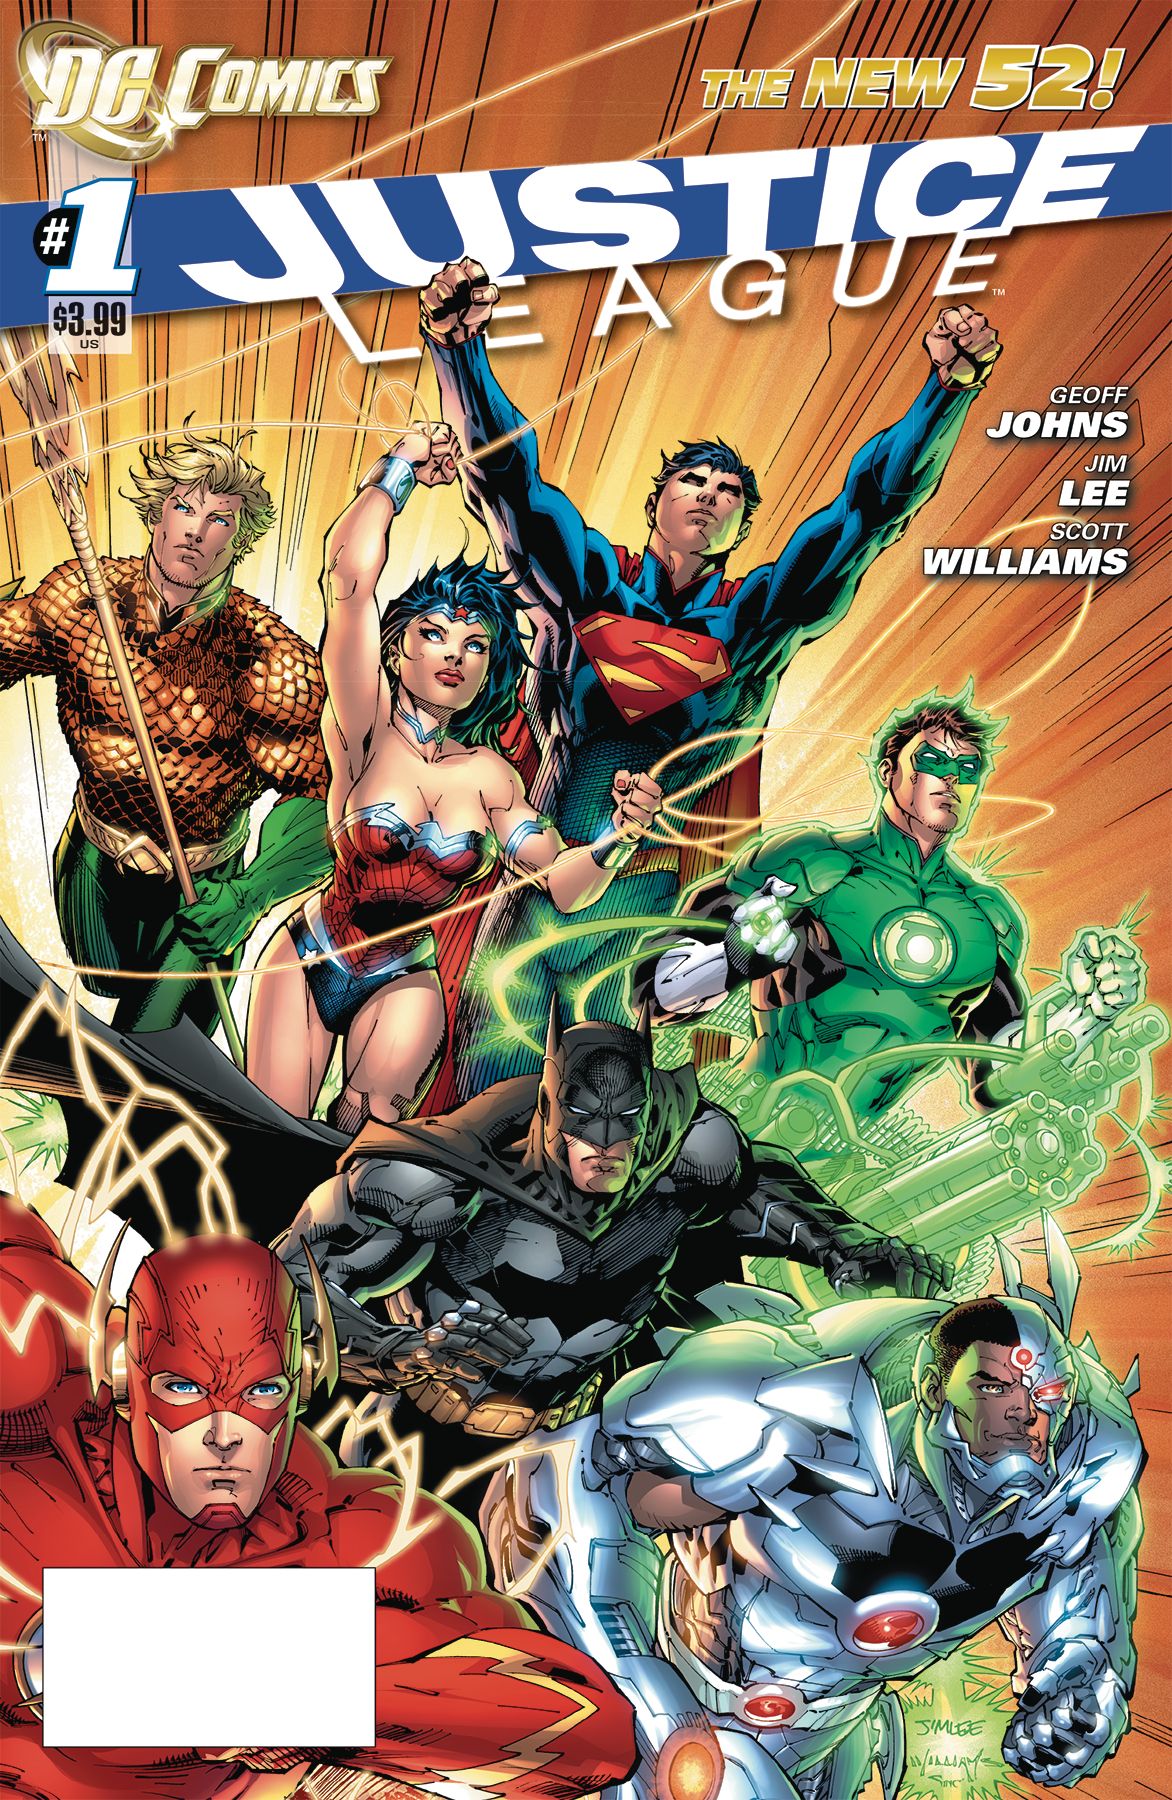 Dollar Comics: Justice League Comic